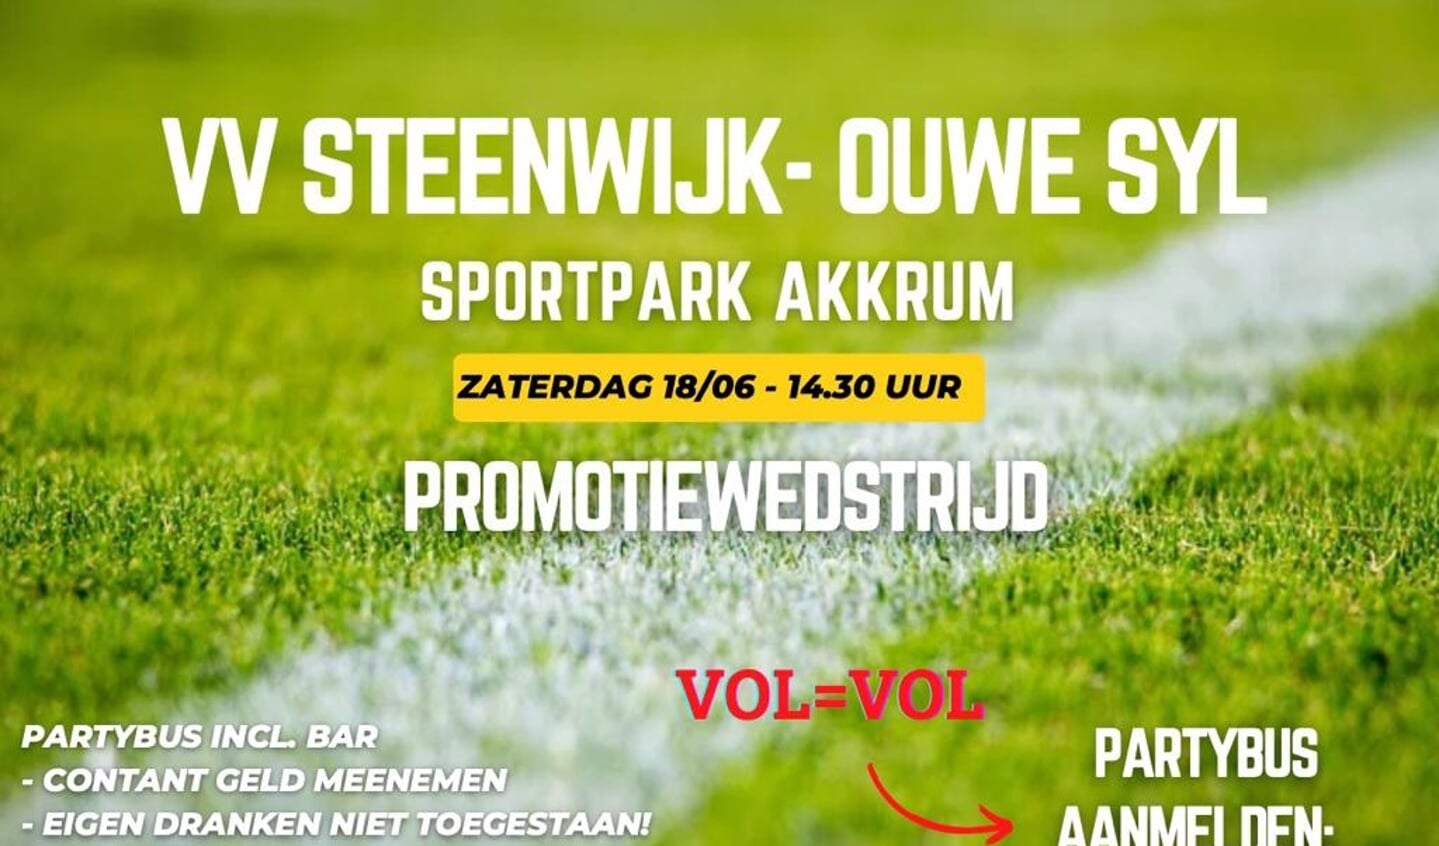 VV Steenwijk-Ouwe Syl